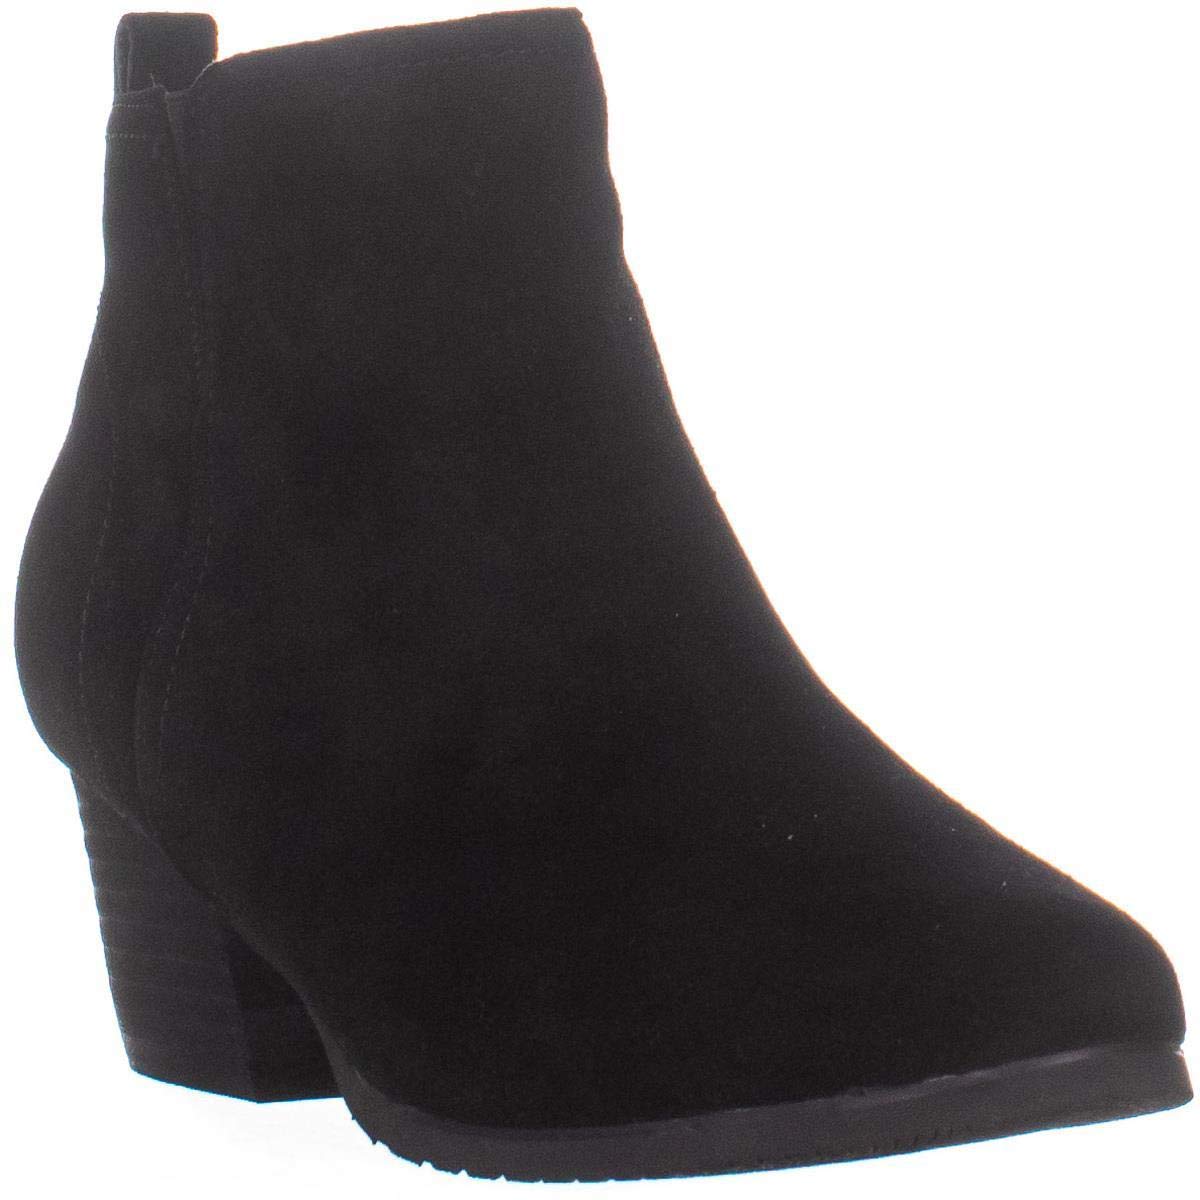 Aqua College Womens Isla Closed Toe Ankle Fashion Boots Black Suede Size 75 L Ebay 0368